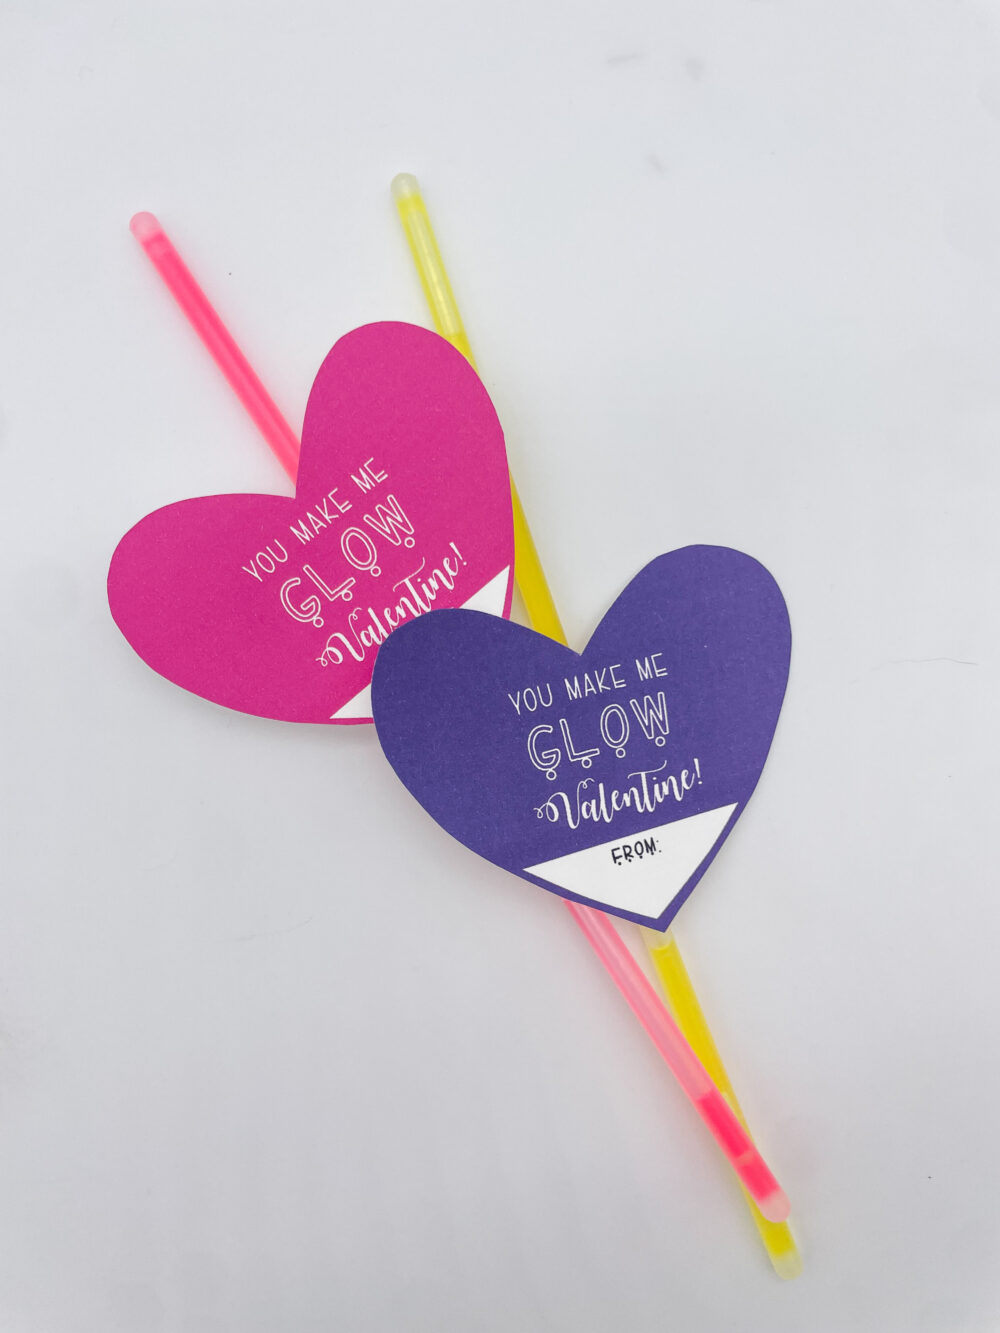 glow stick valentine cards in heart shape